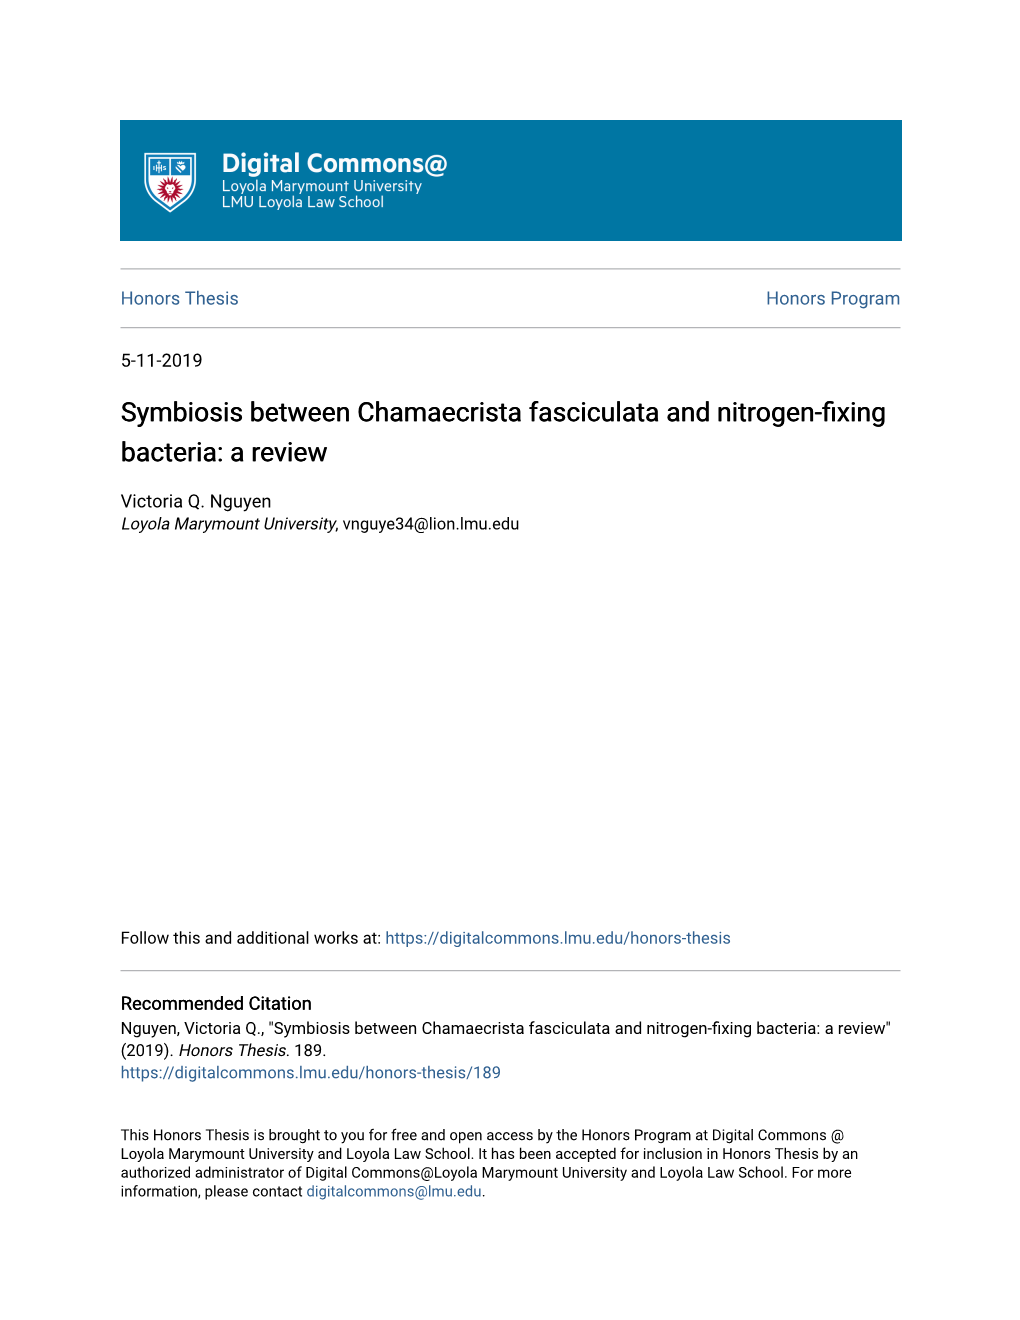 Symbiosis Between Chamaecrista Fasciculata and Nitrogen-Fixing Bacteria: a Review